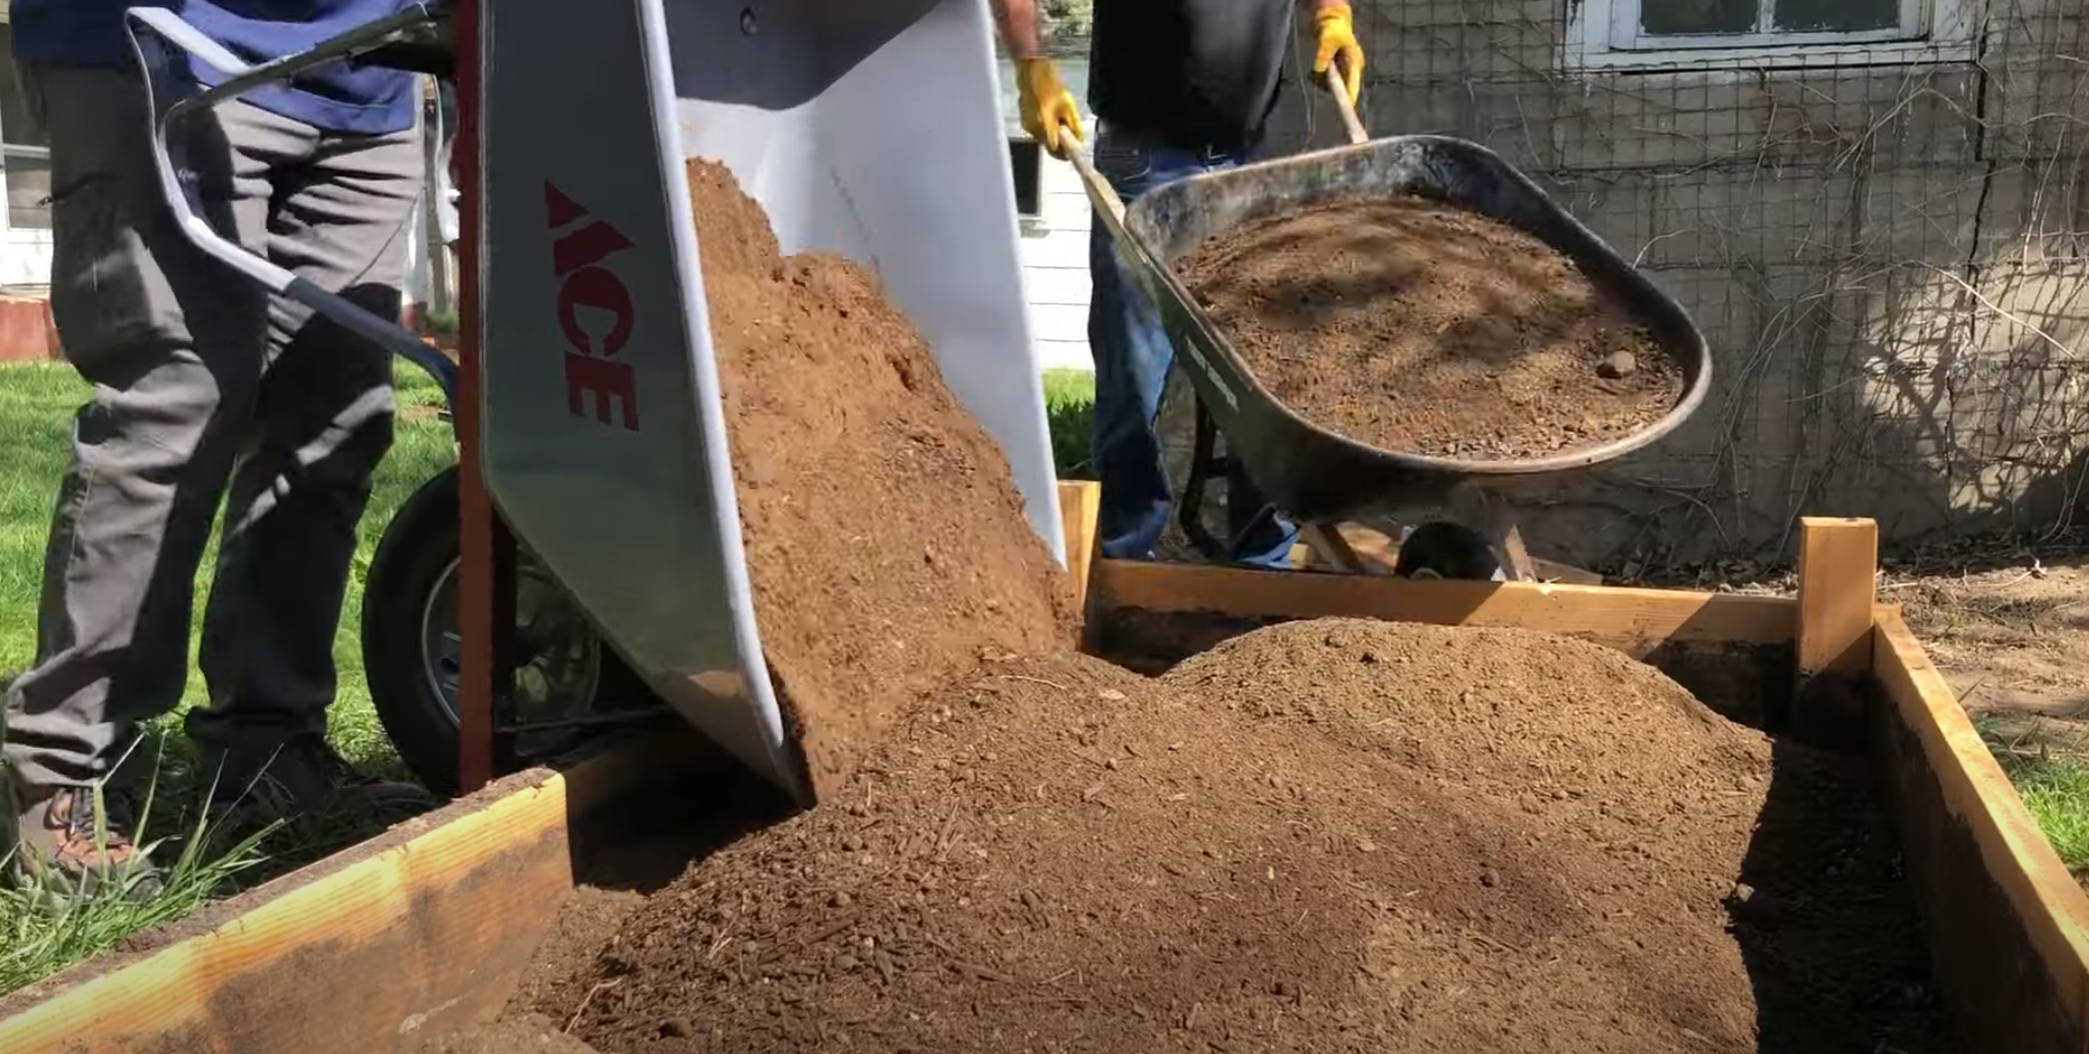 Wheelbarrow pouring composting and soil into garden bed